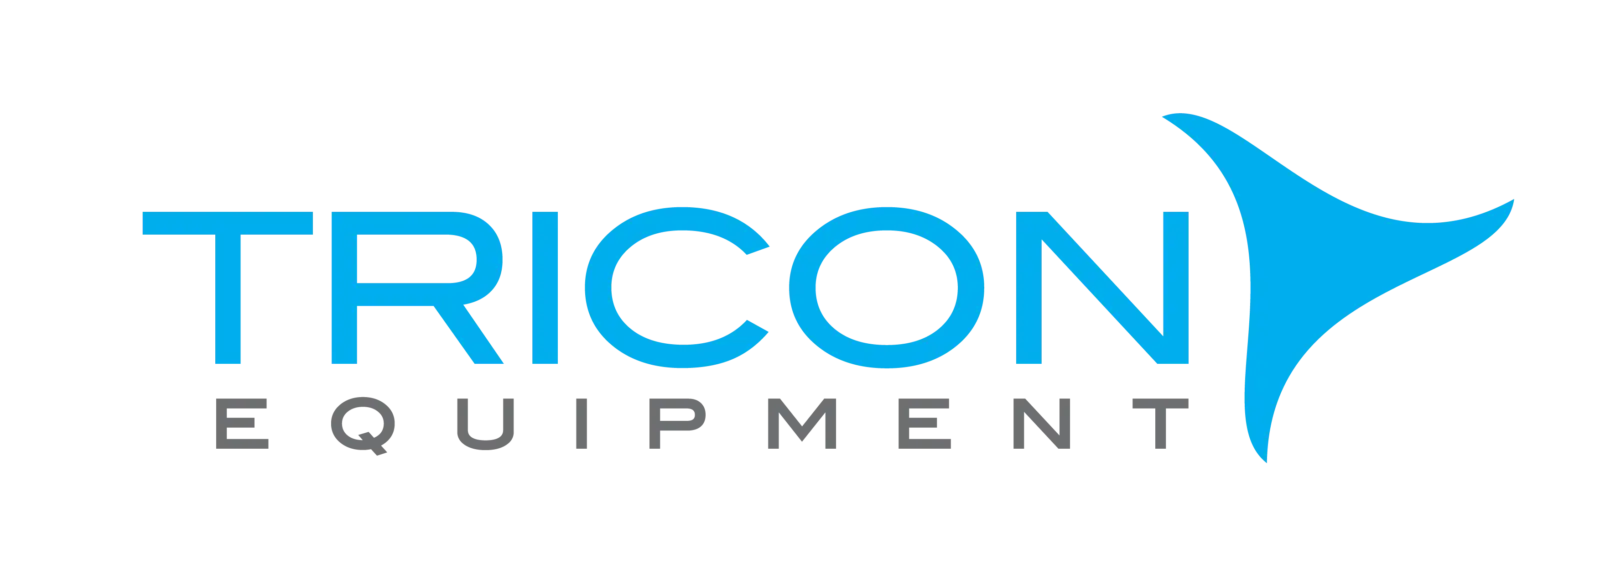 Tricon Mining Equipment